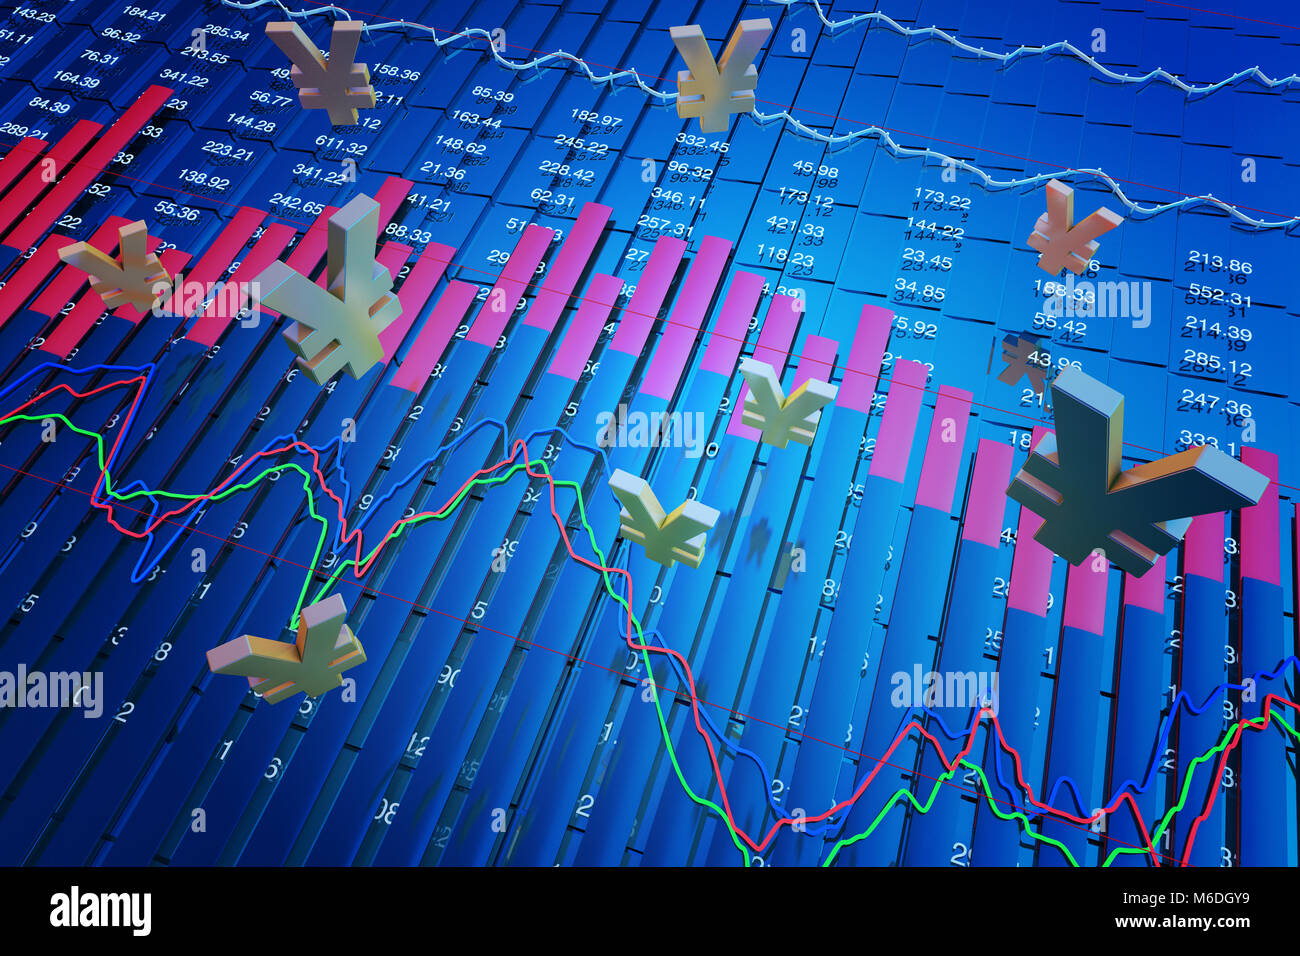 Financial stock market data, currency symbols, financial reform Stock Photo